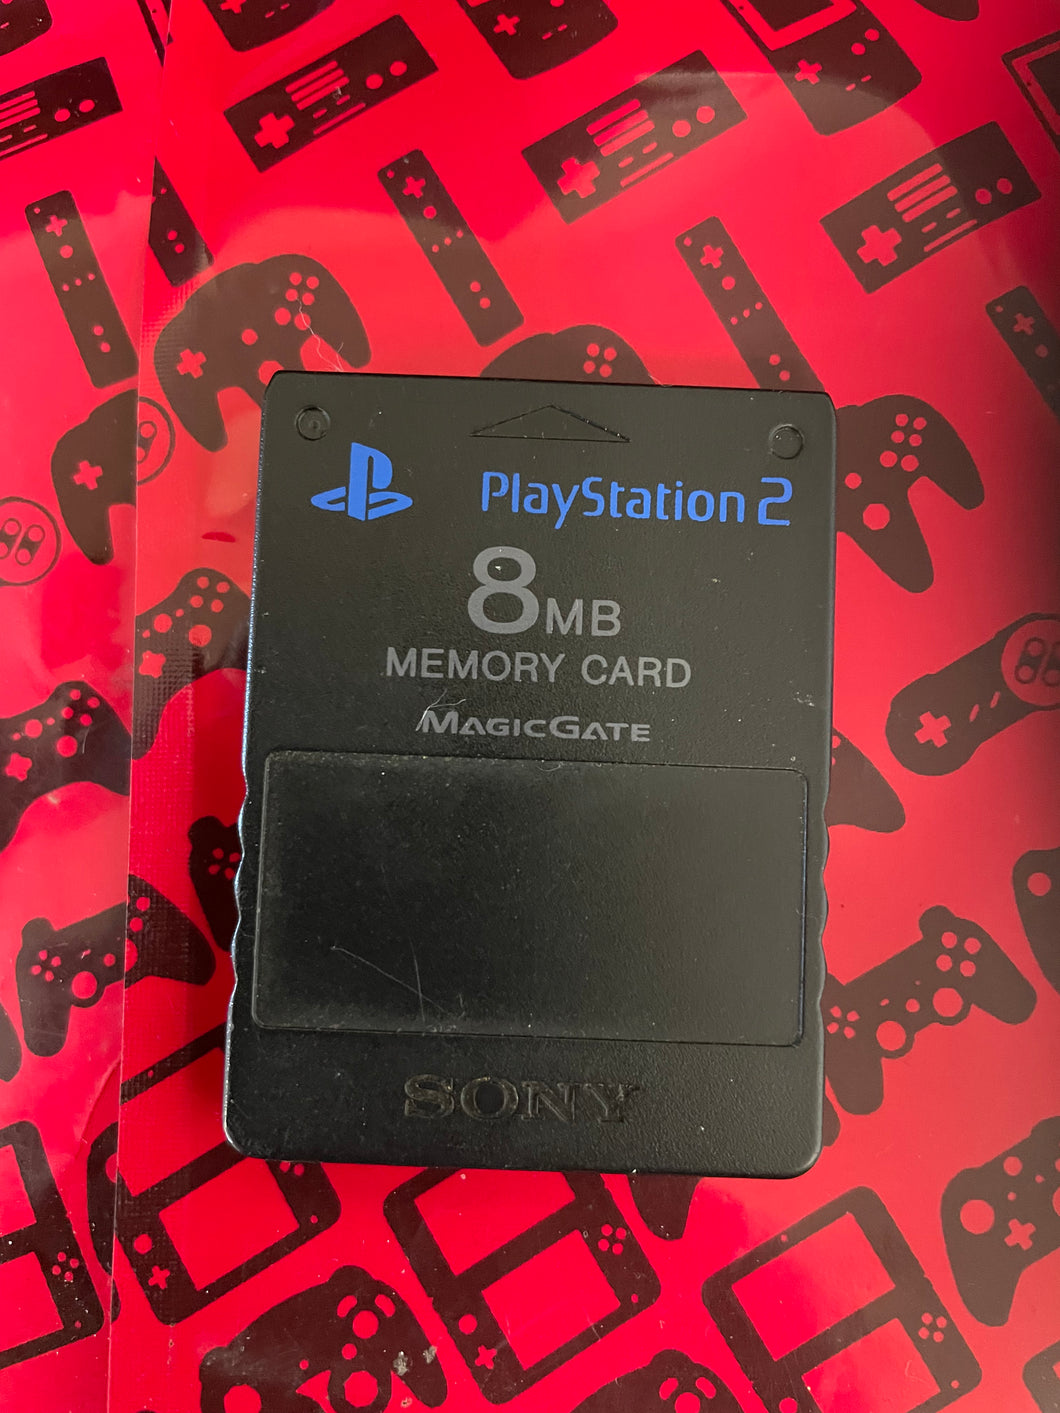 8Mb Memory Card Playstation 2 Sony MagicGate Black